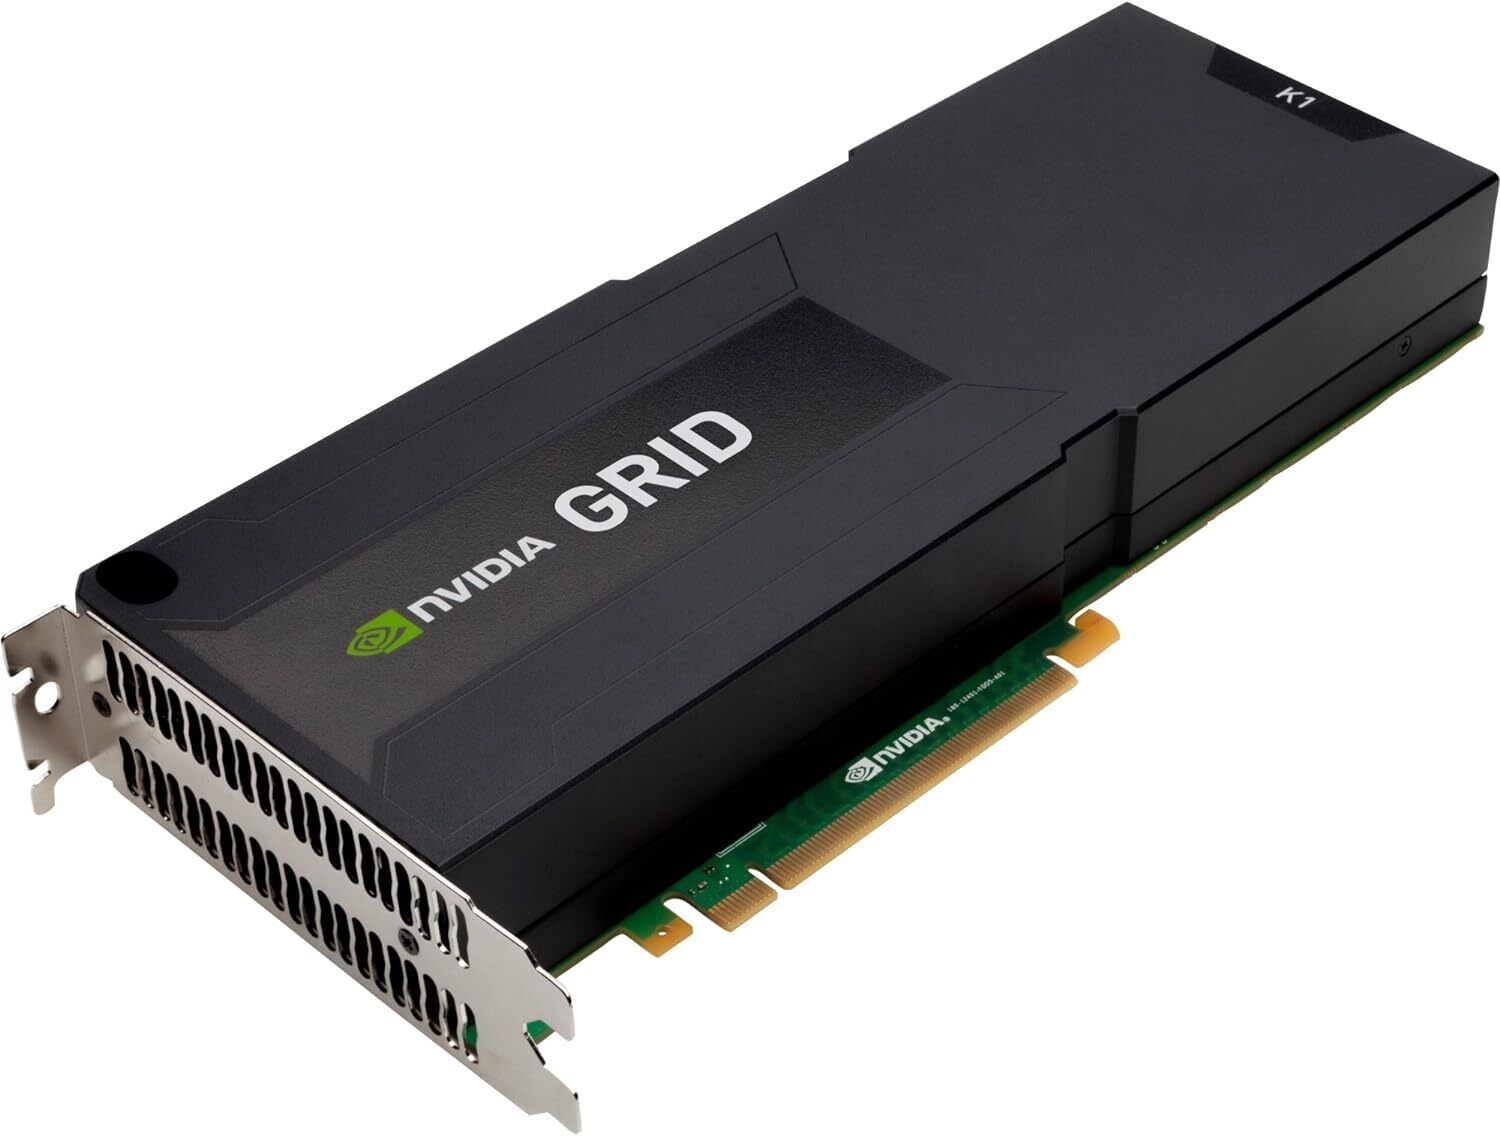 HP NVIDIA GRID K1 16 GB 4 GPU PCI-E 3.0x16 Graphics Card Accelerator -Excellent